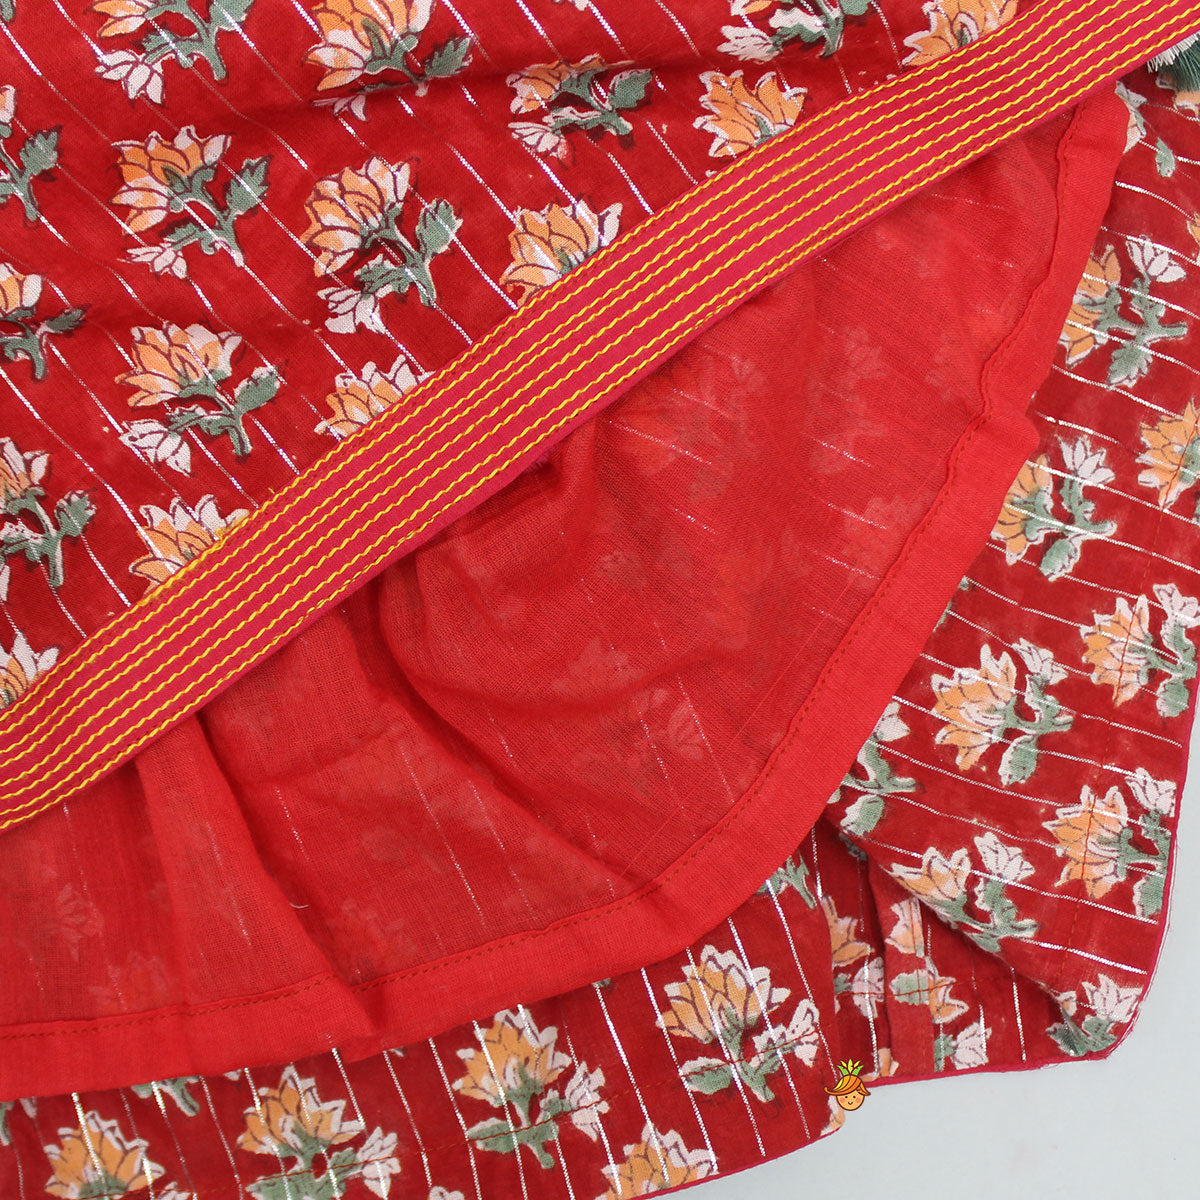 Fringes Tassels Detail Layered Jacket Style Red Kurti